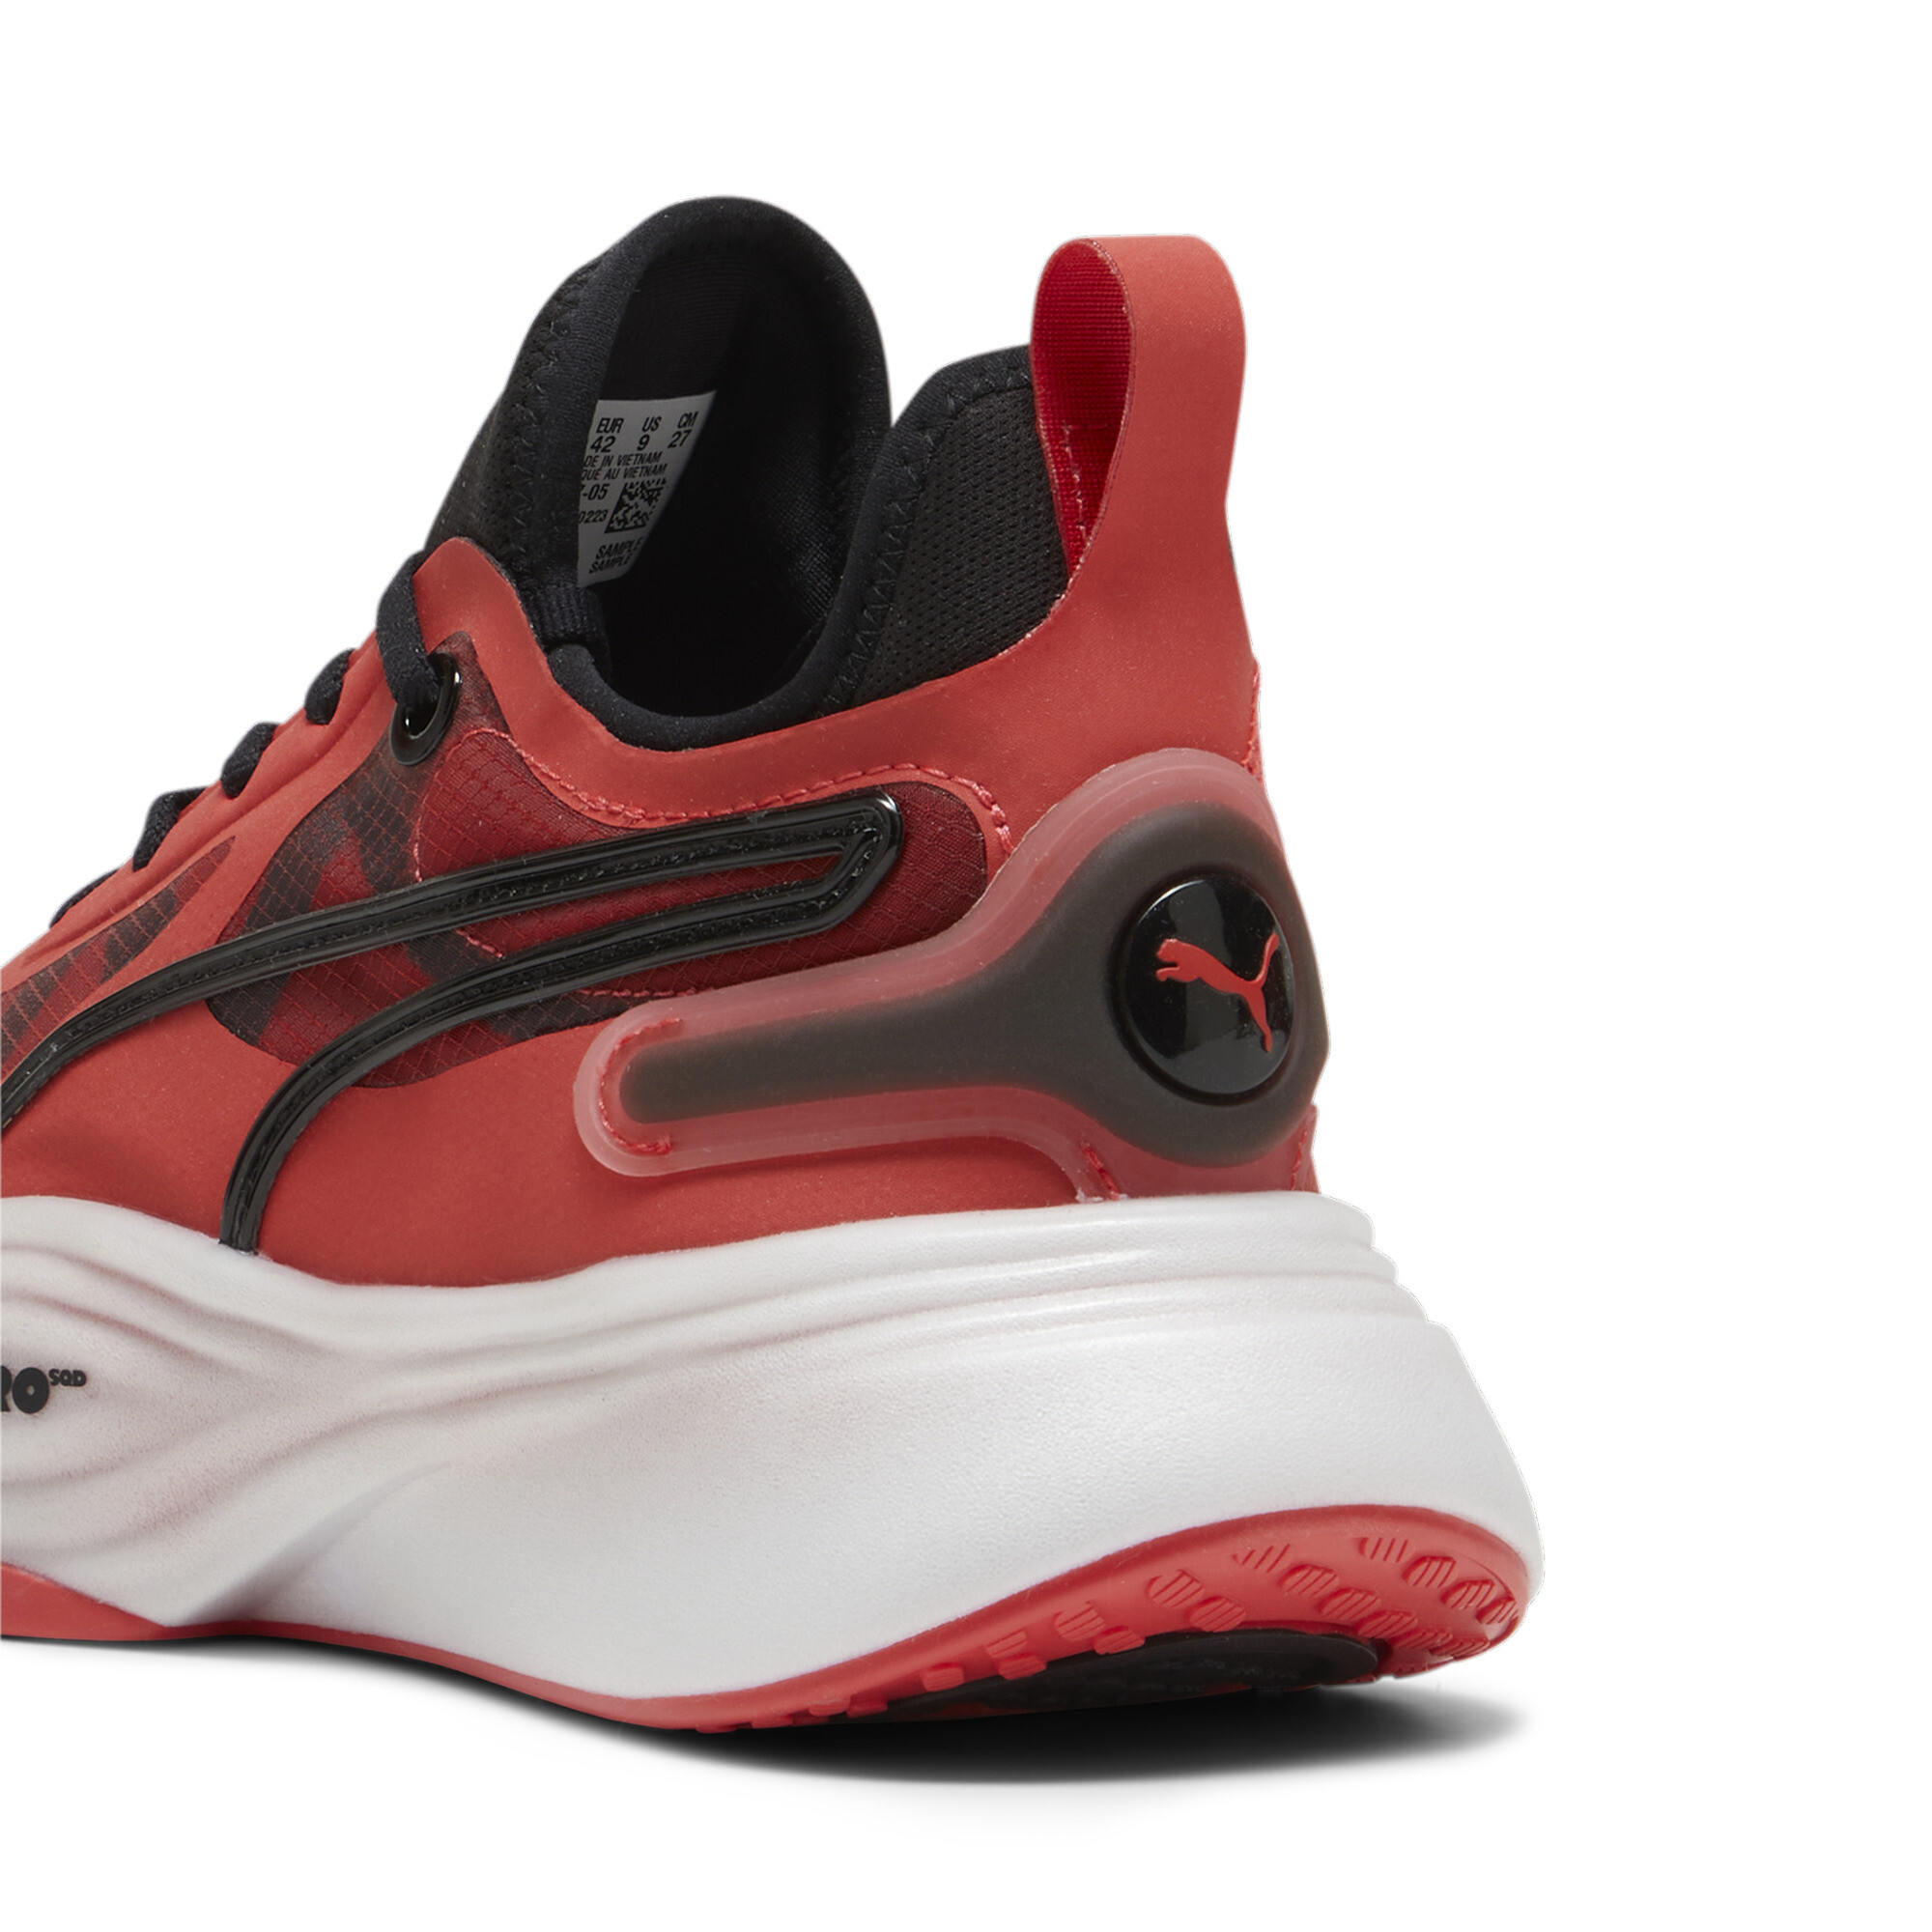 Men's PUMA PWR NITRO SQD Training Shoes In Red, Size EU 40.5